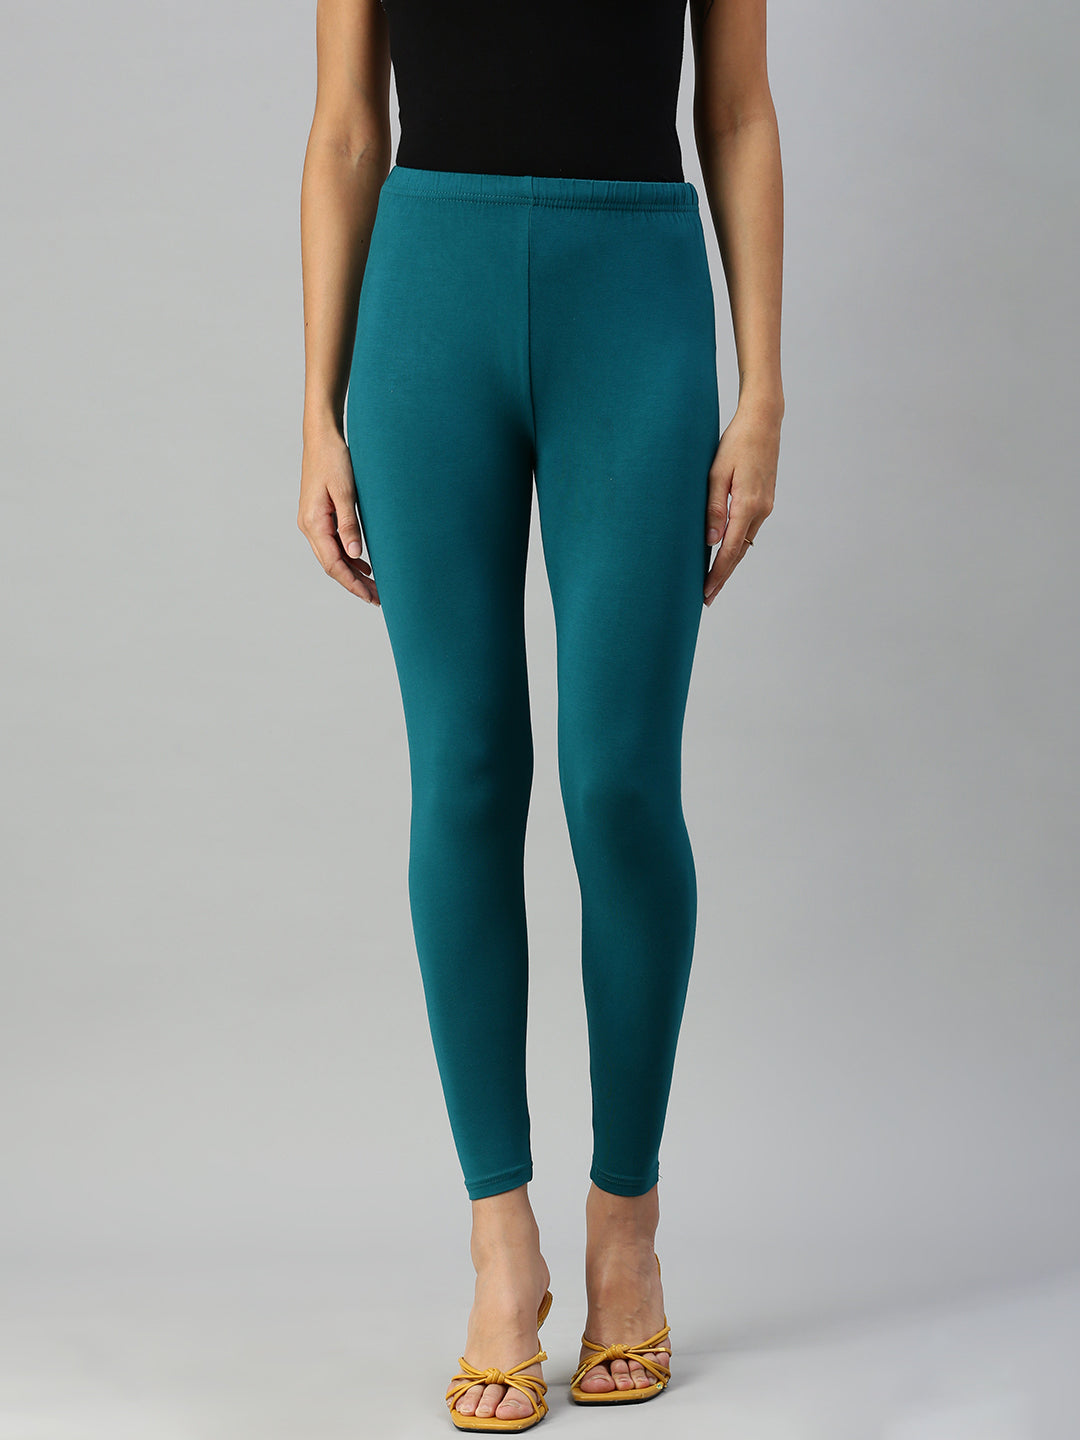 Aqua Green color yoke stitched cotton lycra leggings-LGP09